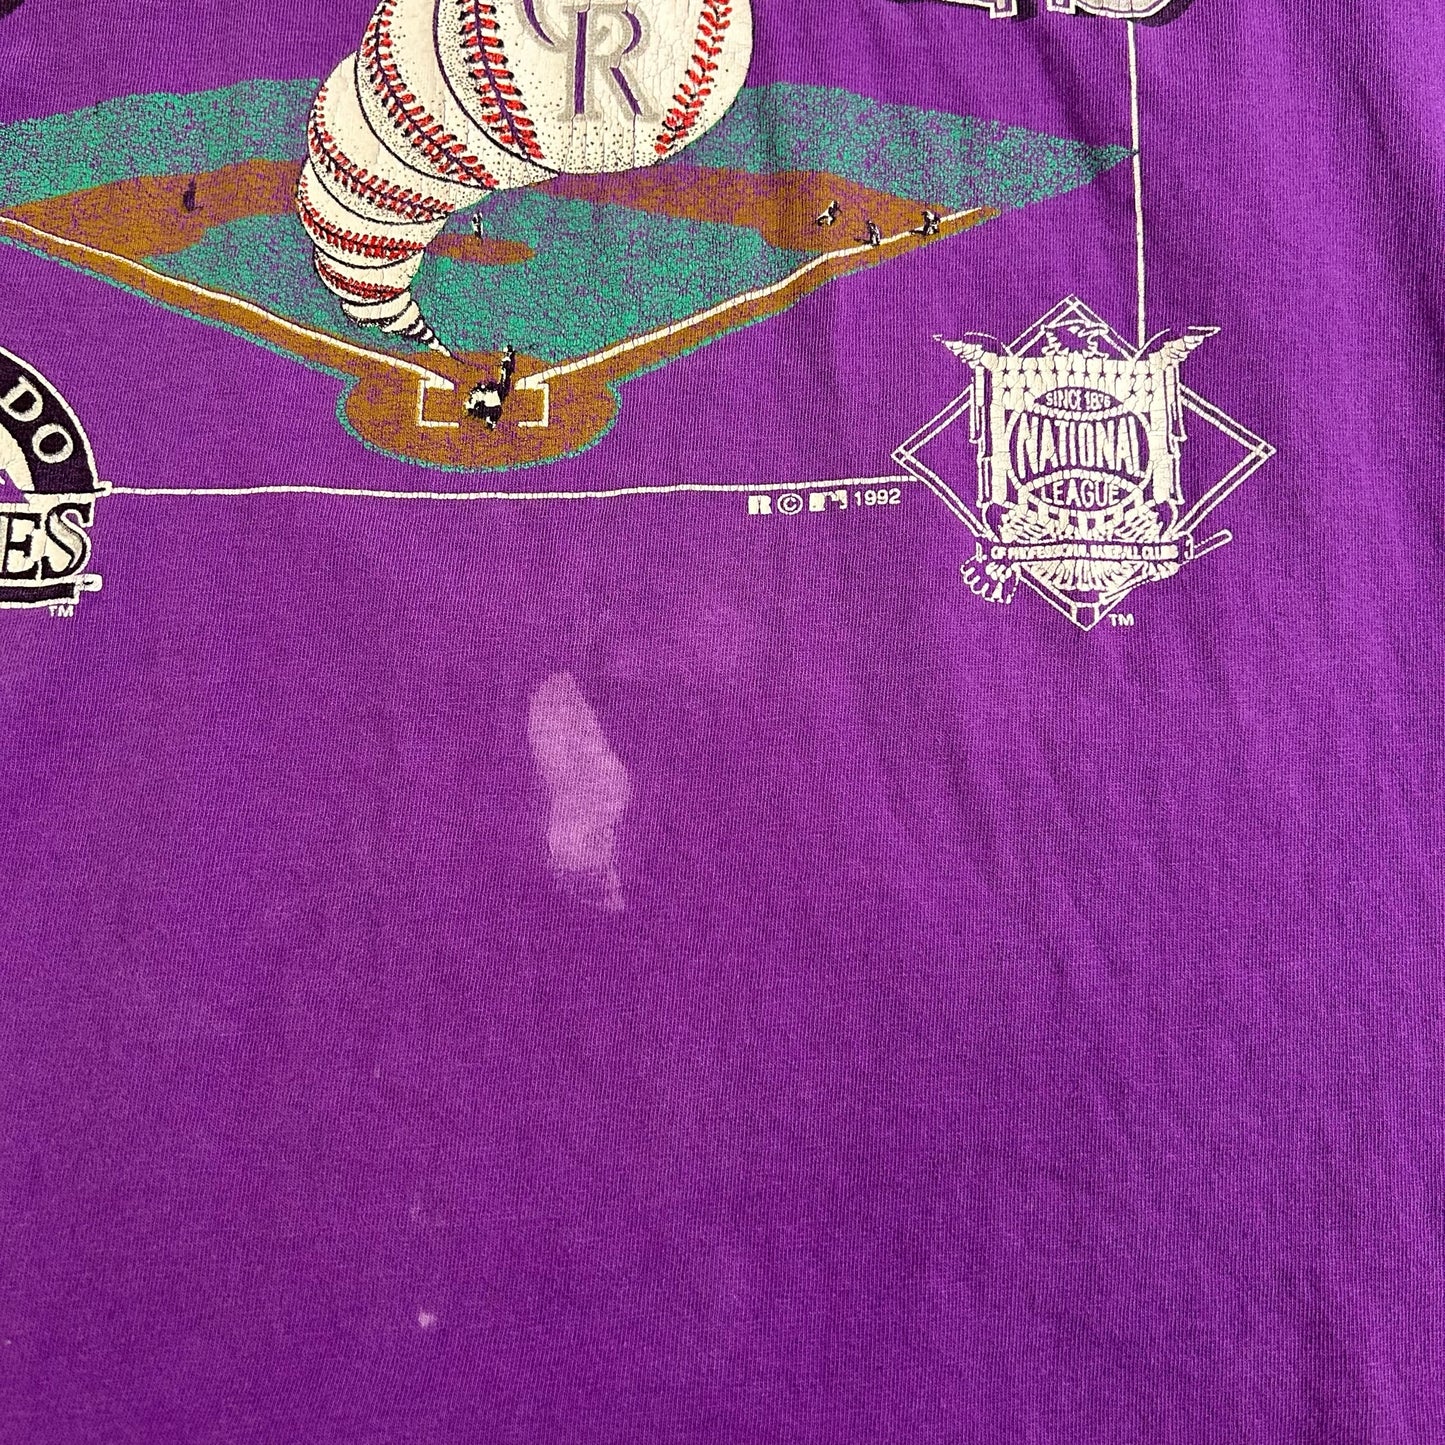 1992 Colorado Rockies MLB T-Shirt size M/L